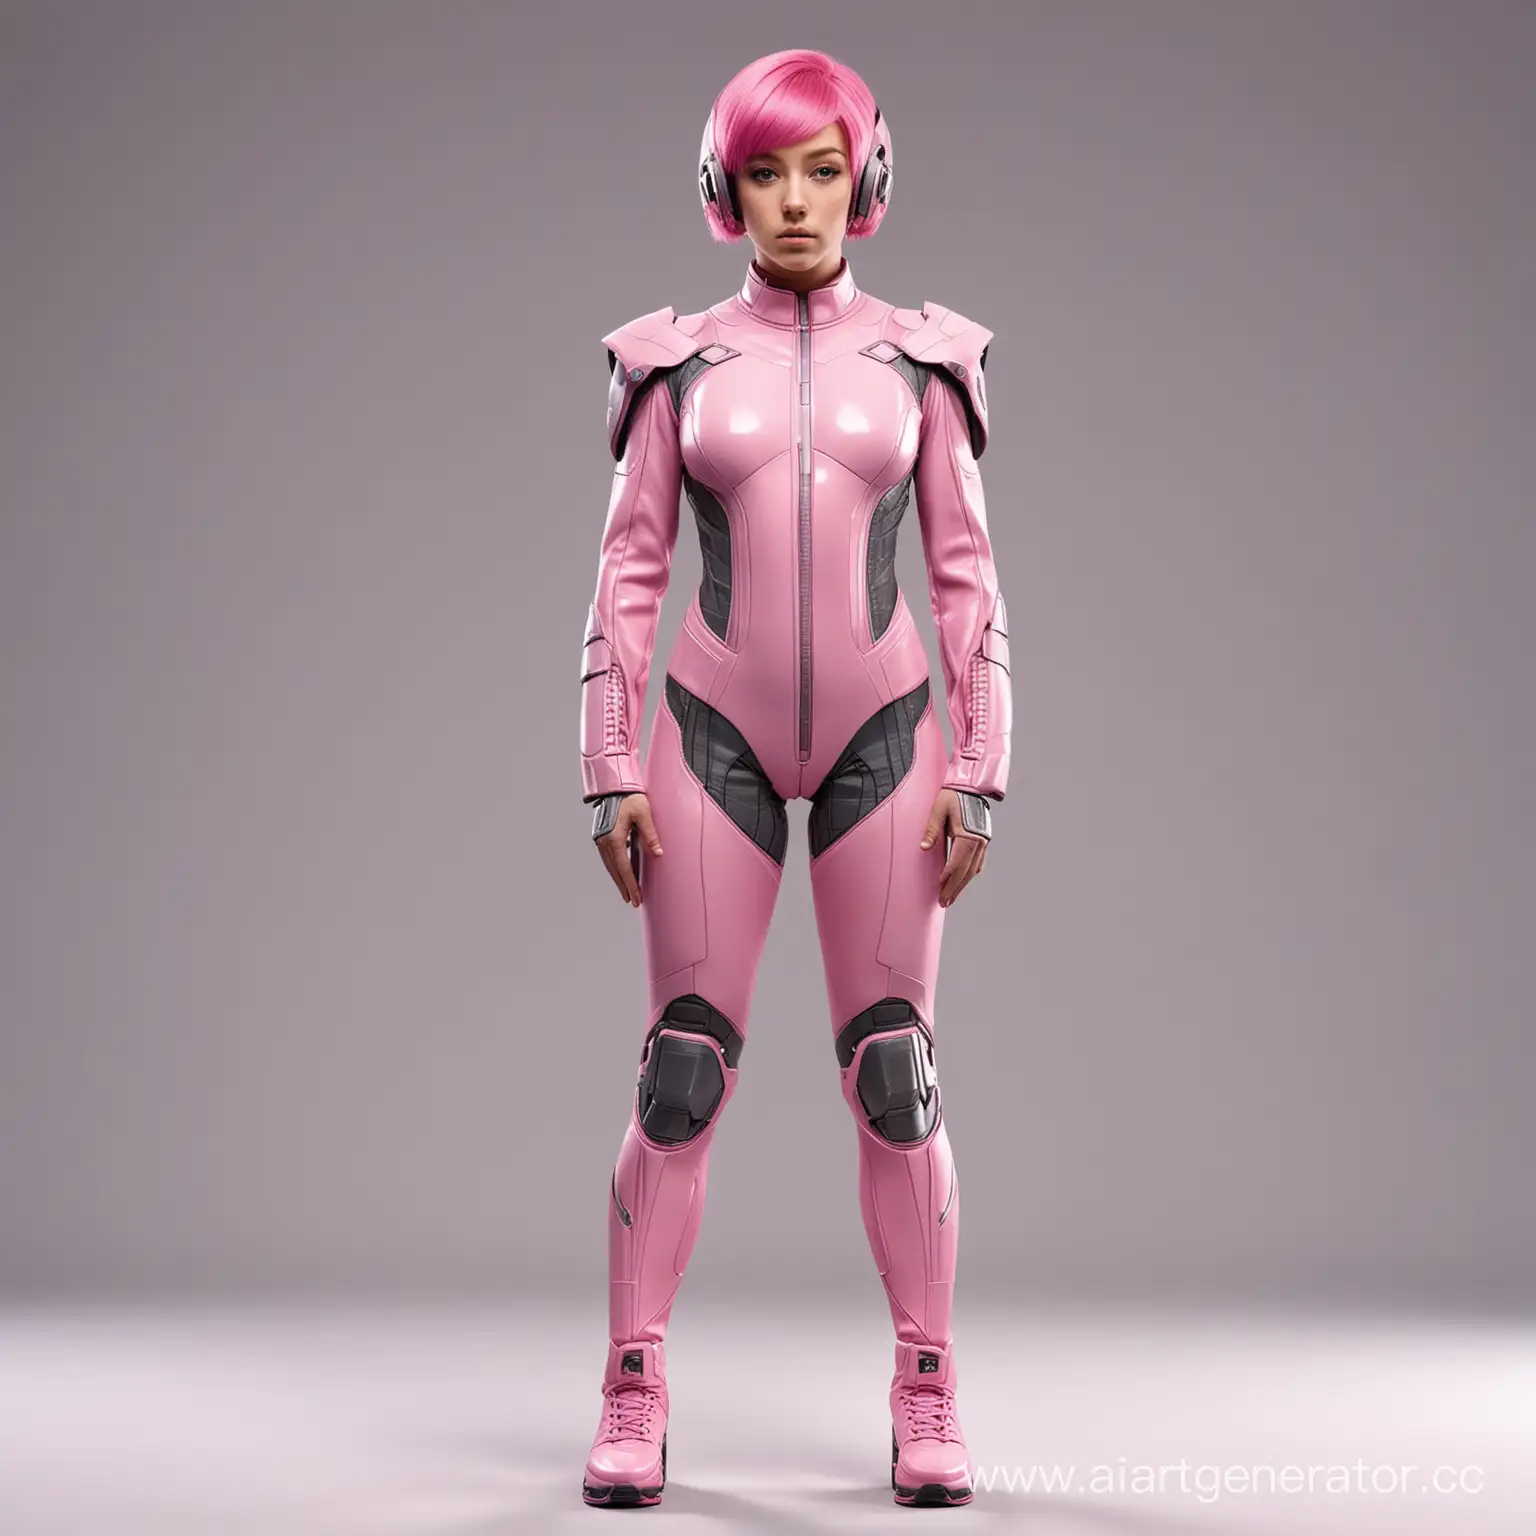 Futuristic-Girl-Standing-Tall-in-Pink-Attire